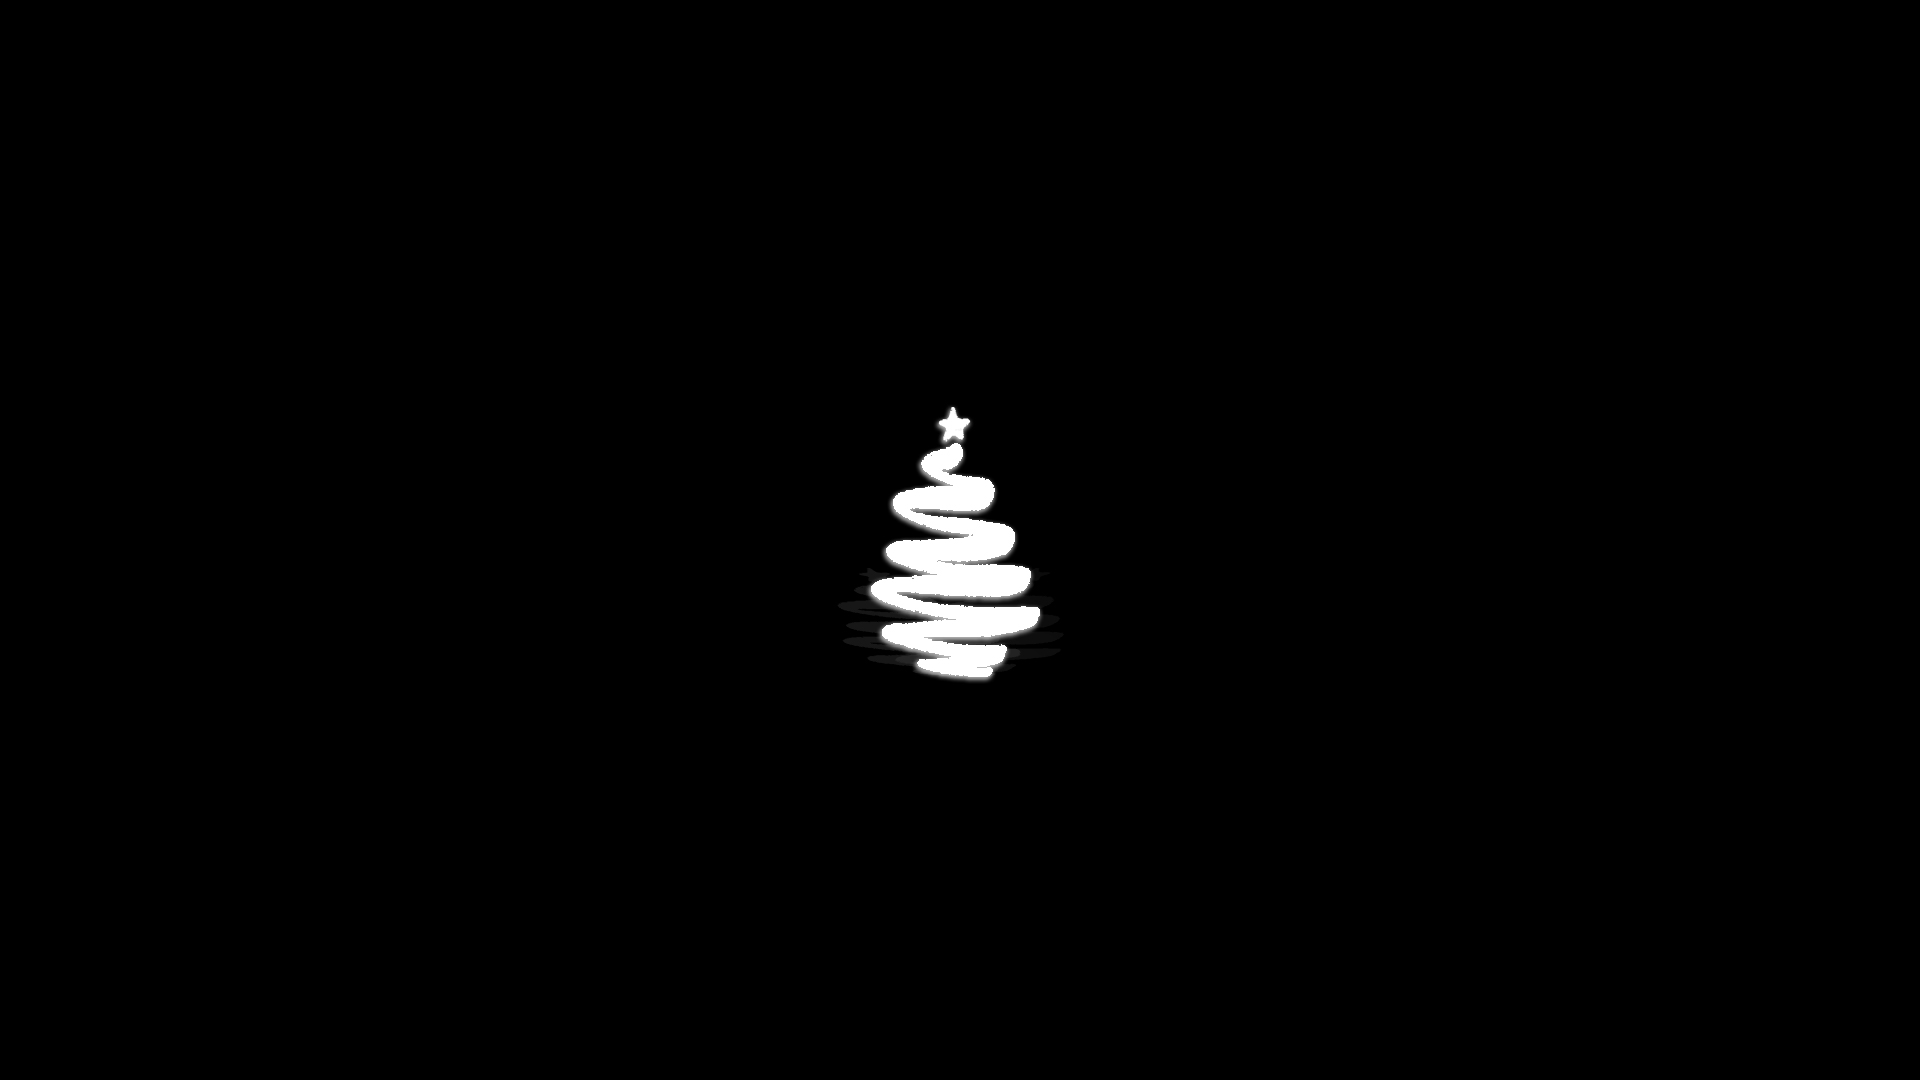 General 1920x1080 black background photoshopped Christmas Christmas tree monochrome